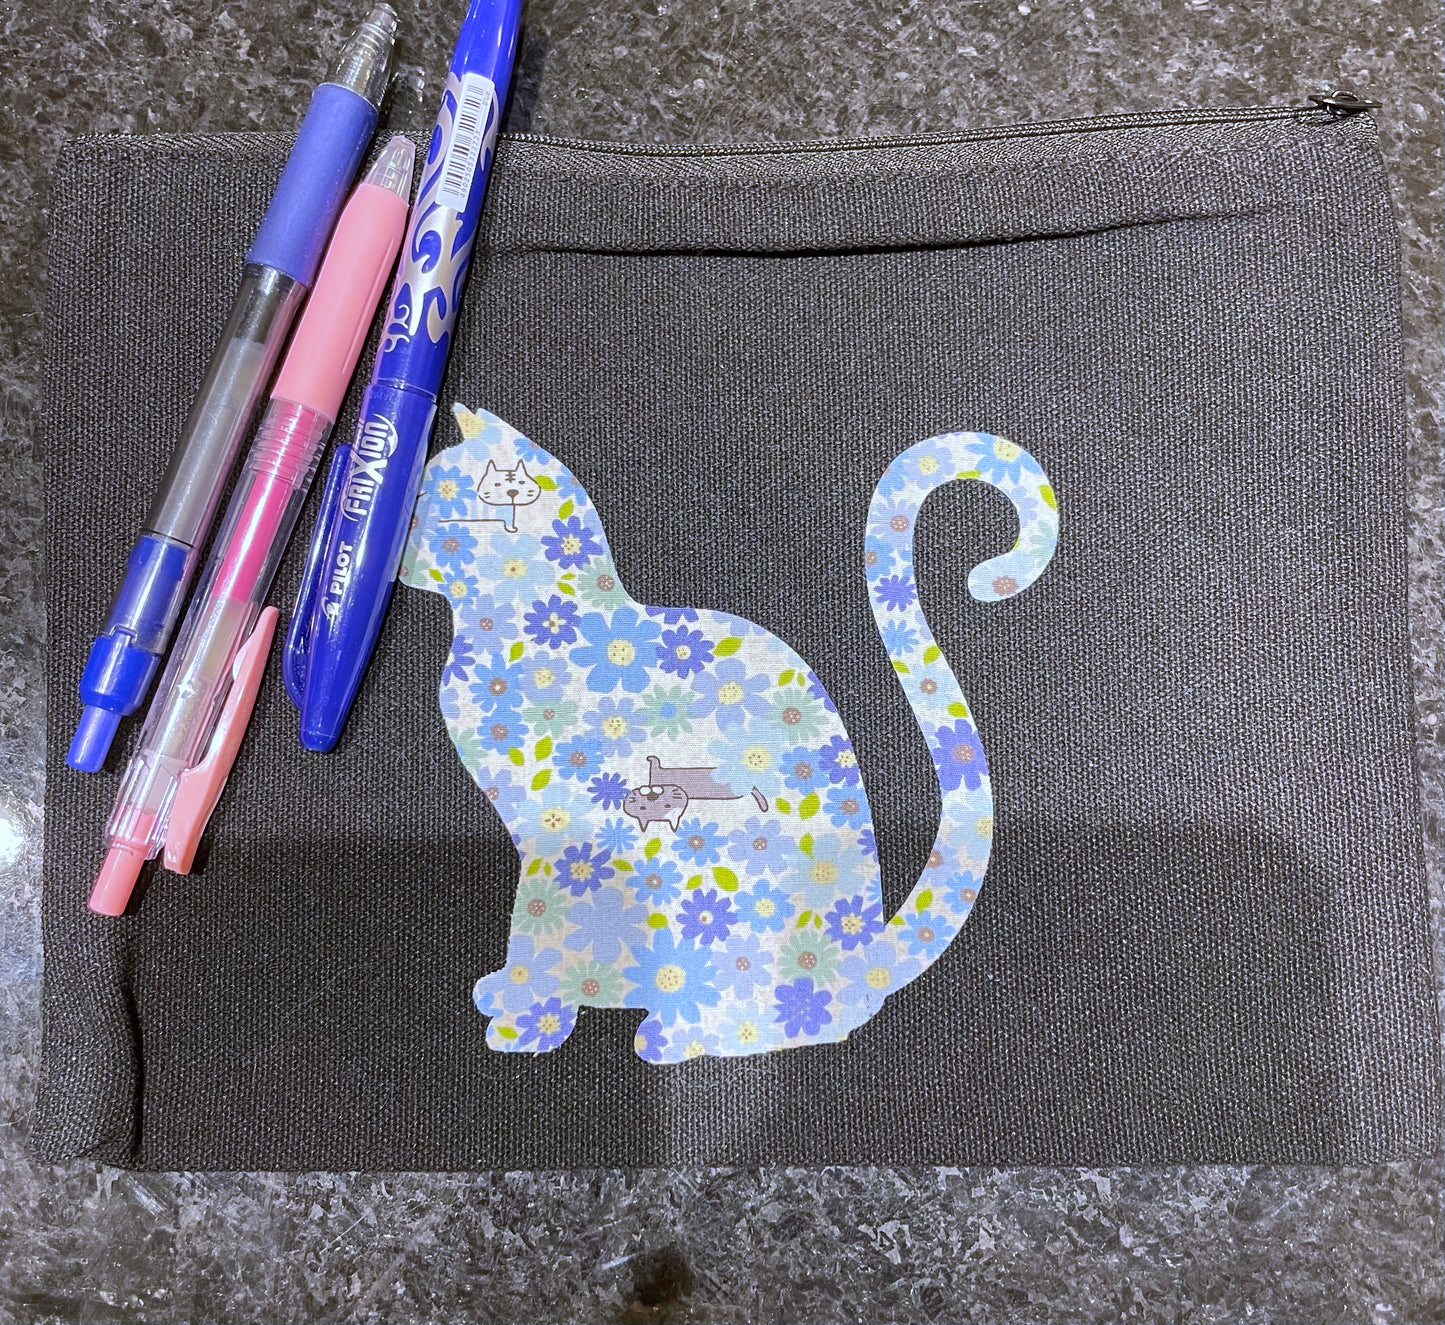 Fabric Appliqué Canvas Pouch | Up Tail Cat Silhouettes